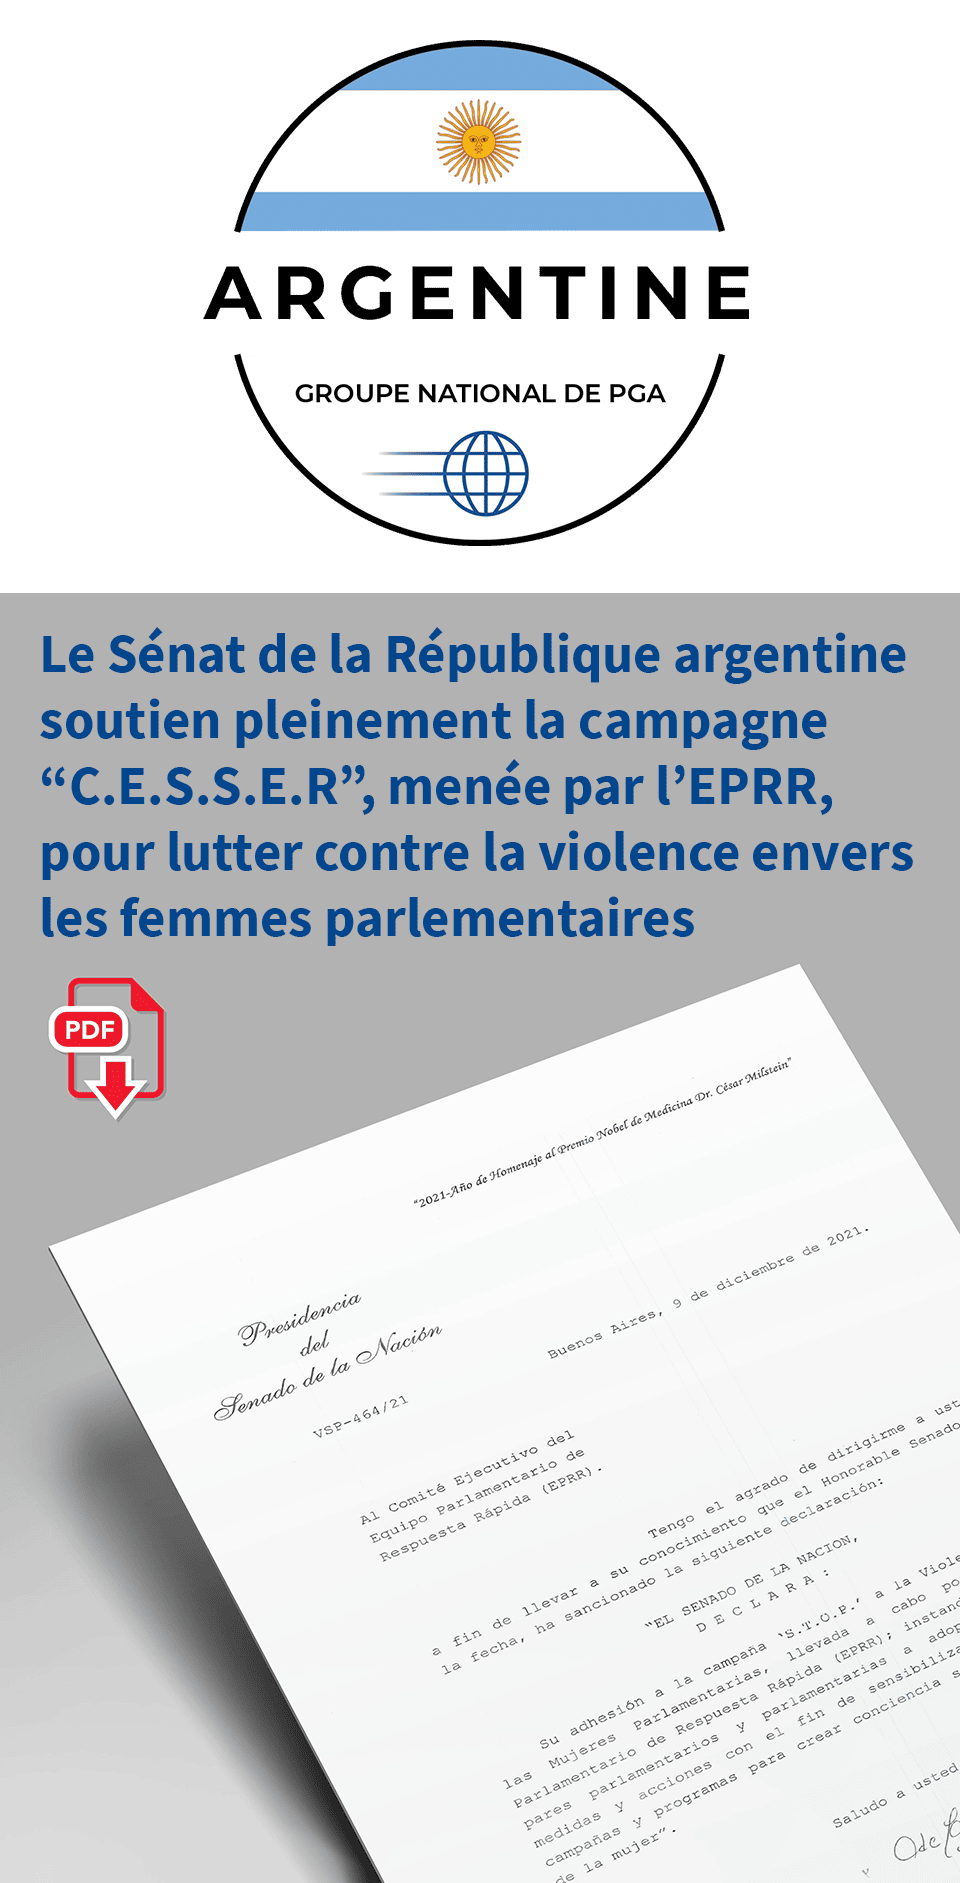 The Senate of the Republic of Argentina endorses PARRT’s initiative to “S.T.O.P” violence against women Parliamentarians